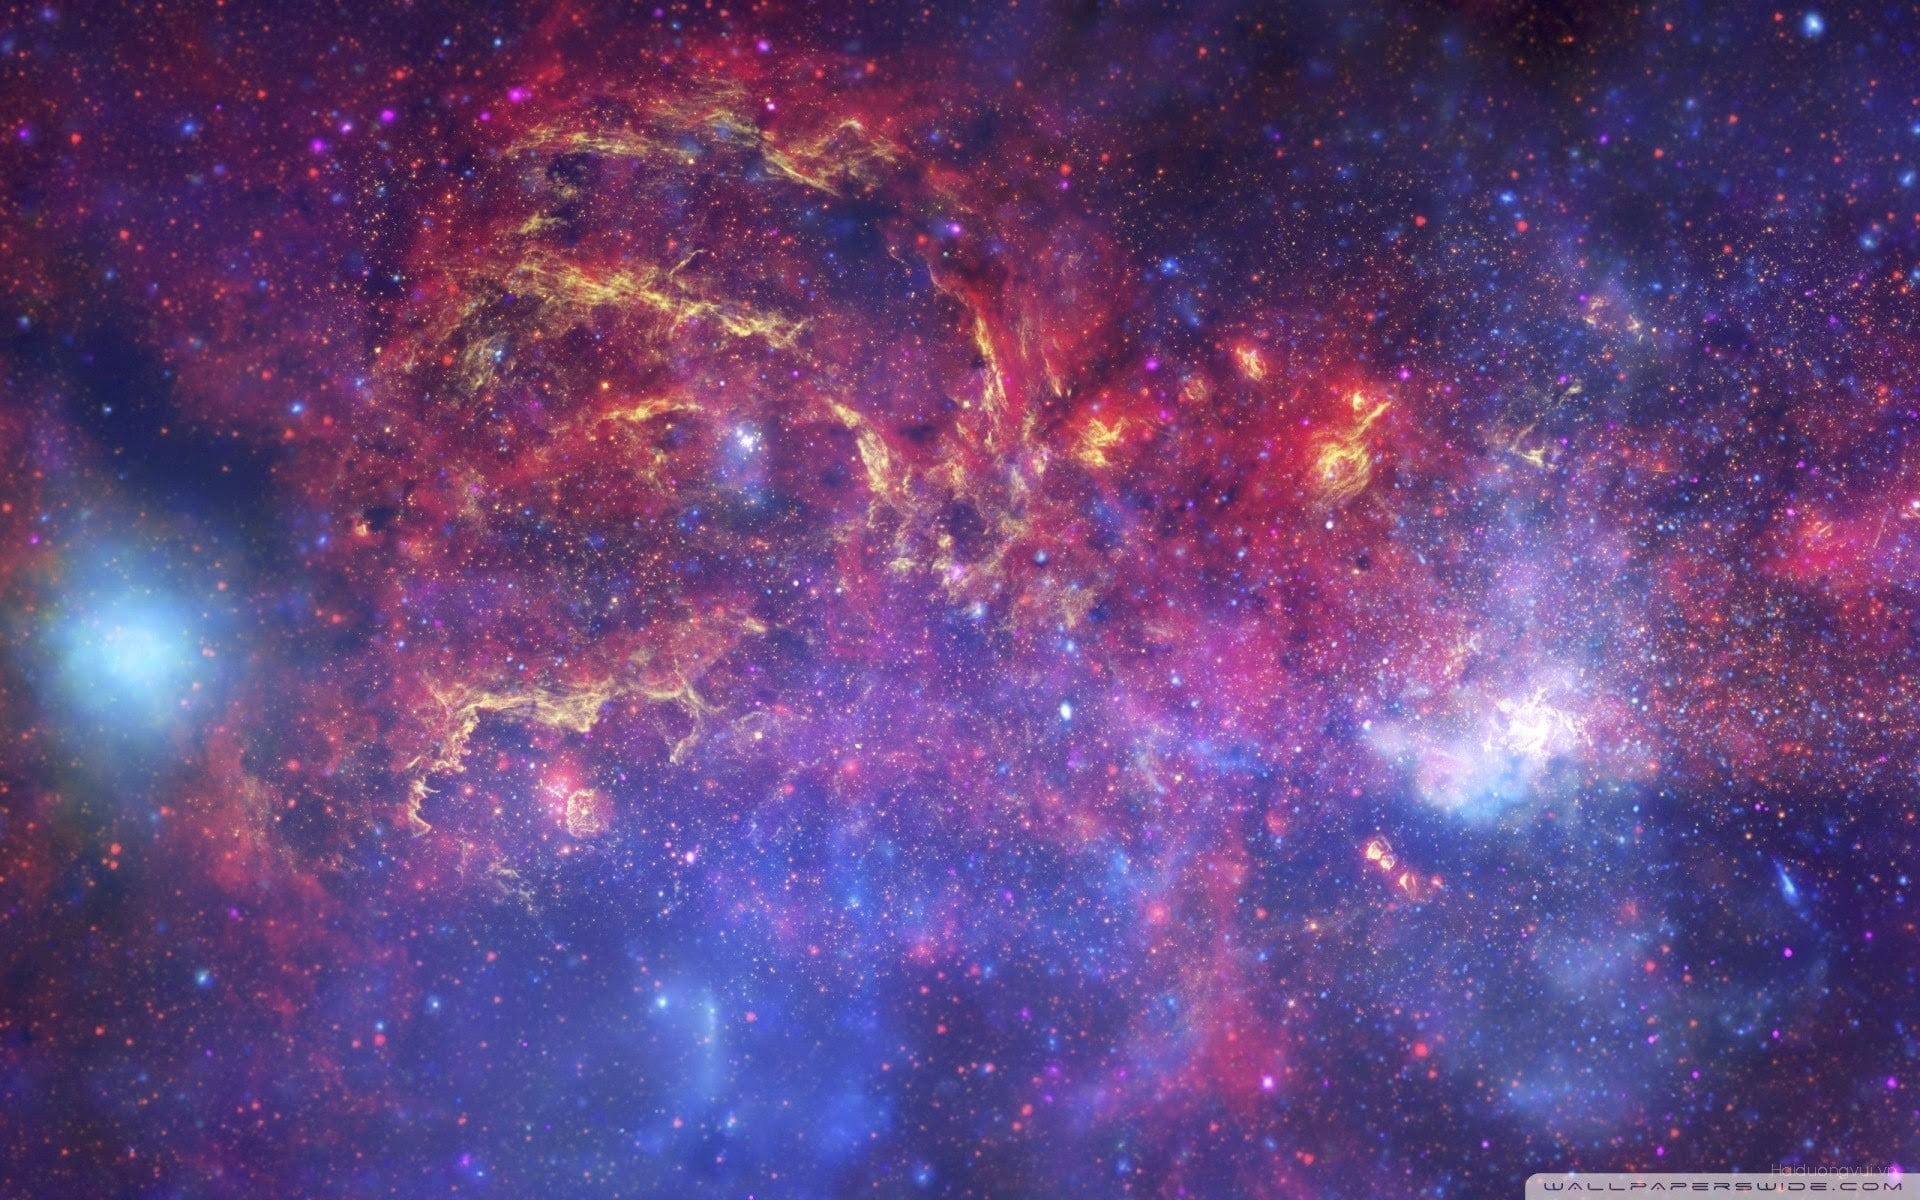 Galaxy digital wallpaper, space, digital art, astronomy, star - space